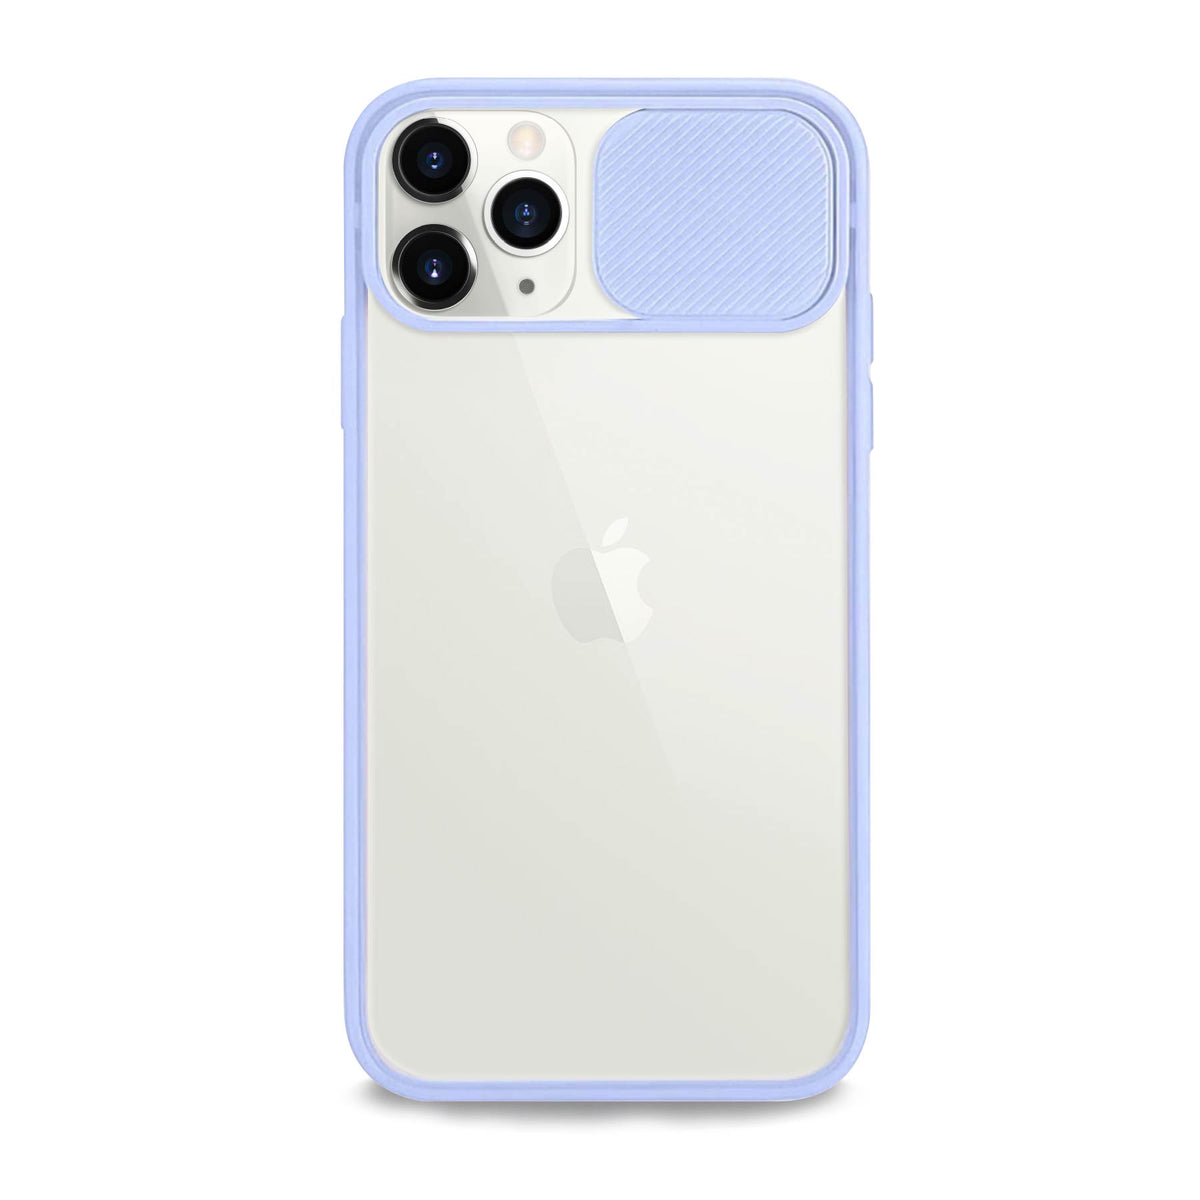 Lavender camera cover iPhone case